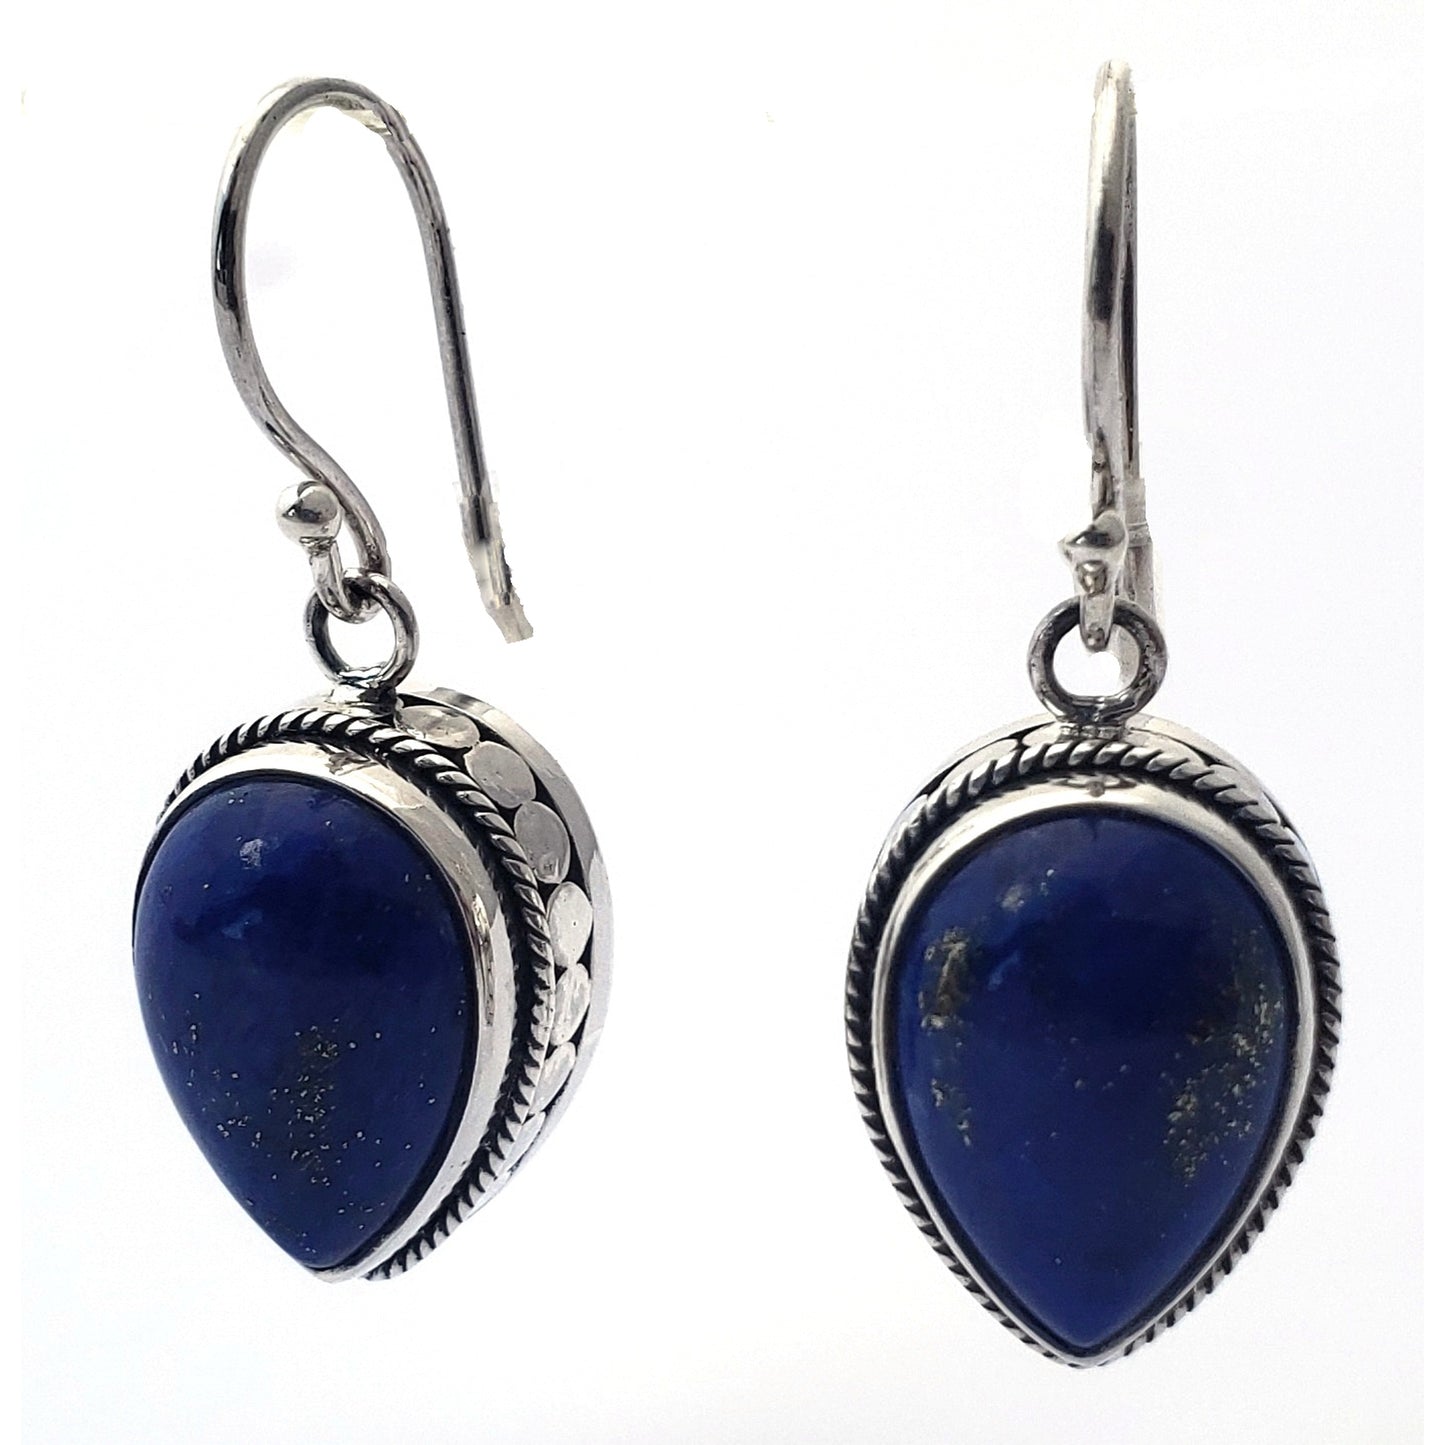 E351LA PADMA .925 Sterling Silver Earrings with Lapis Lazuli Gemstones